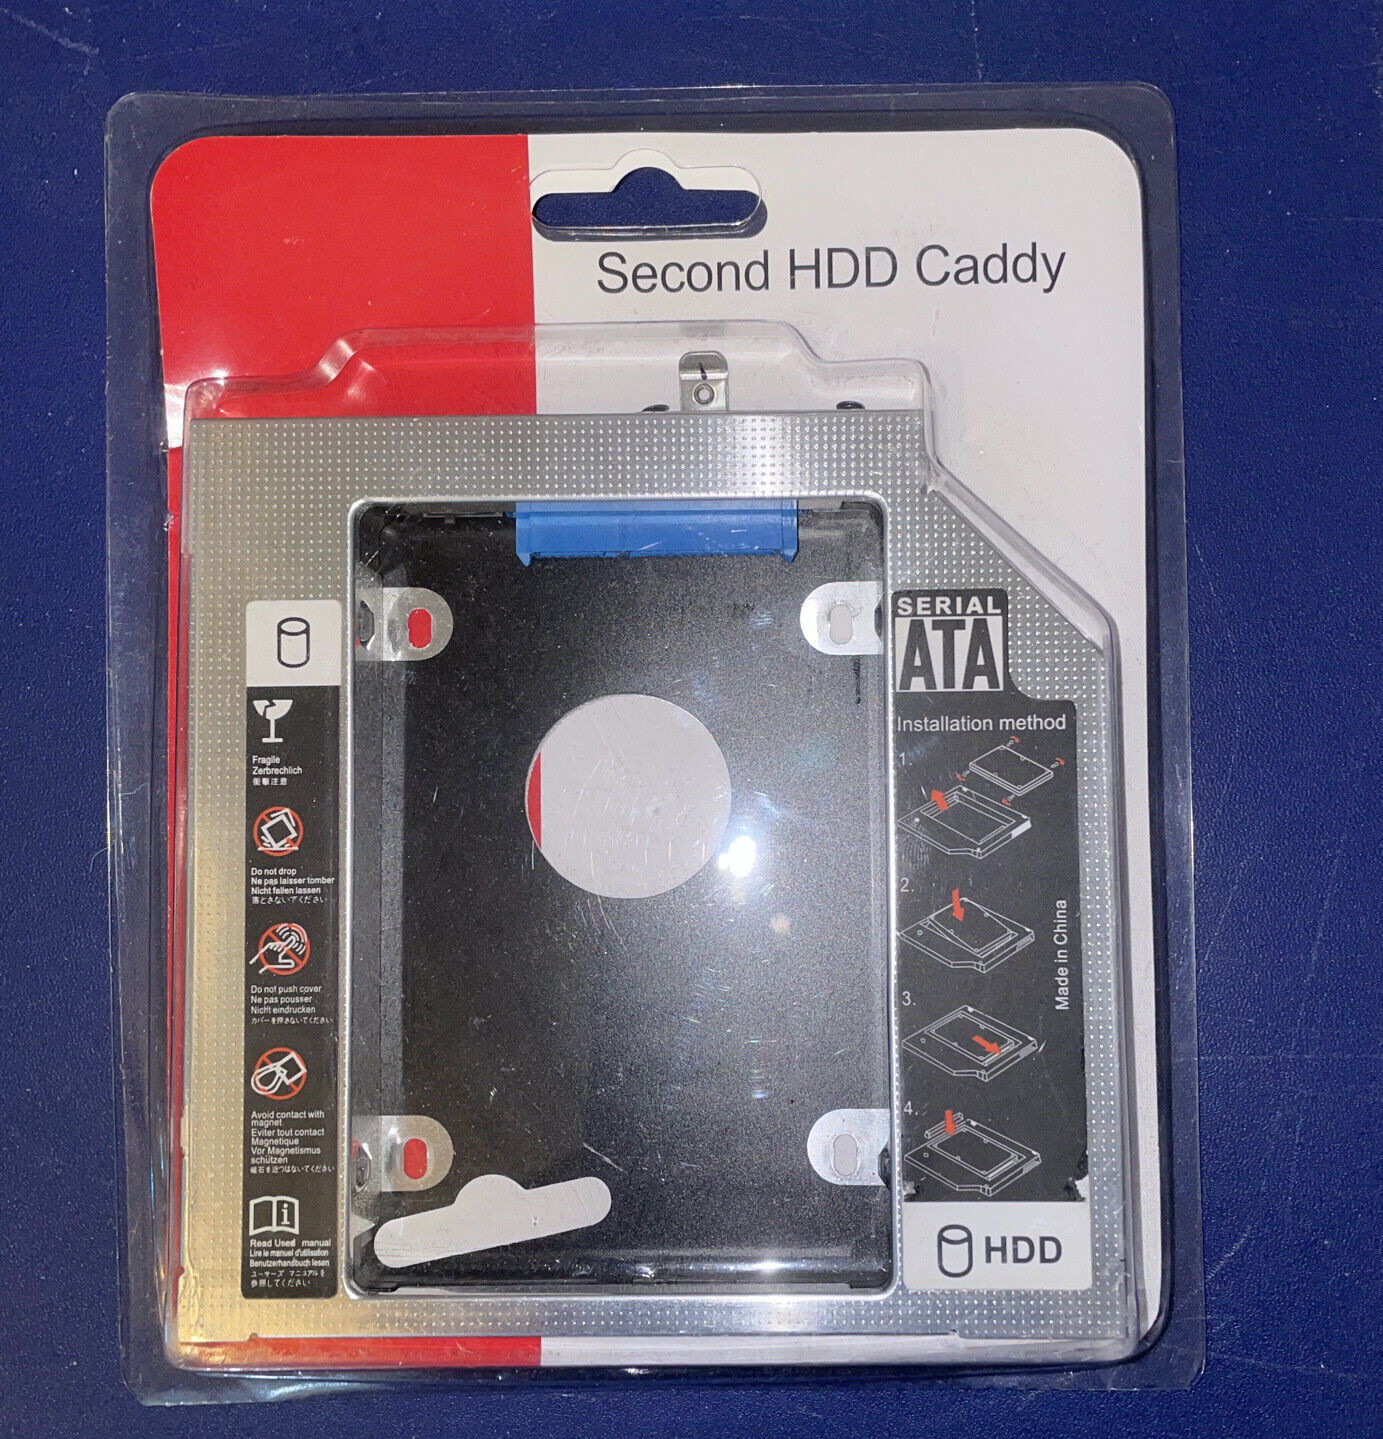 Universal 12.7mm SATA 2nd SSD HDD Hard Drive Caddy for DVD-ROM CD Optical Bay